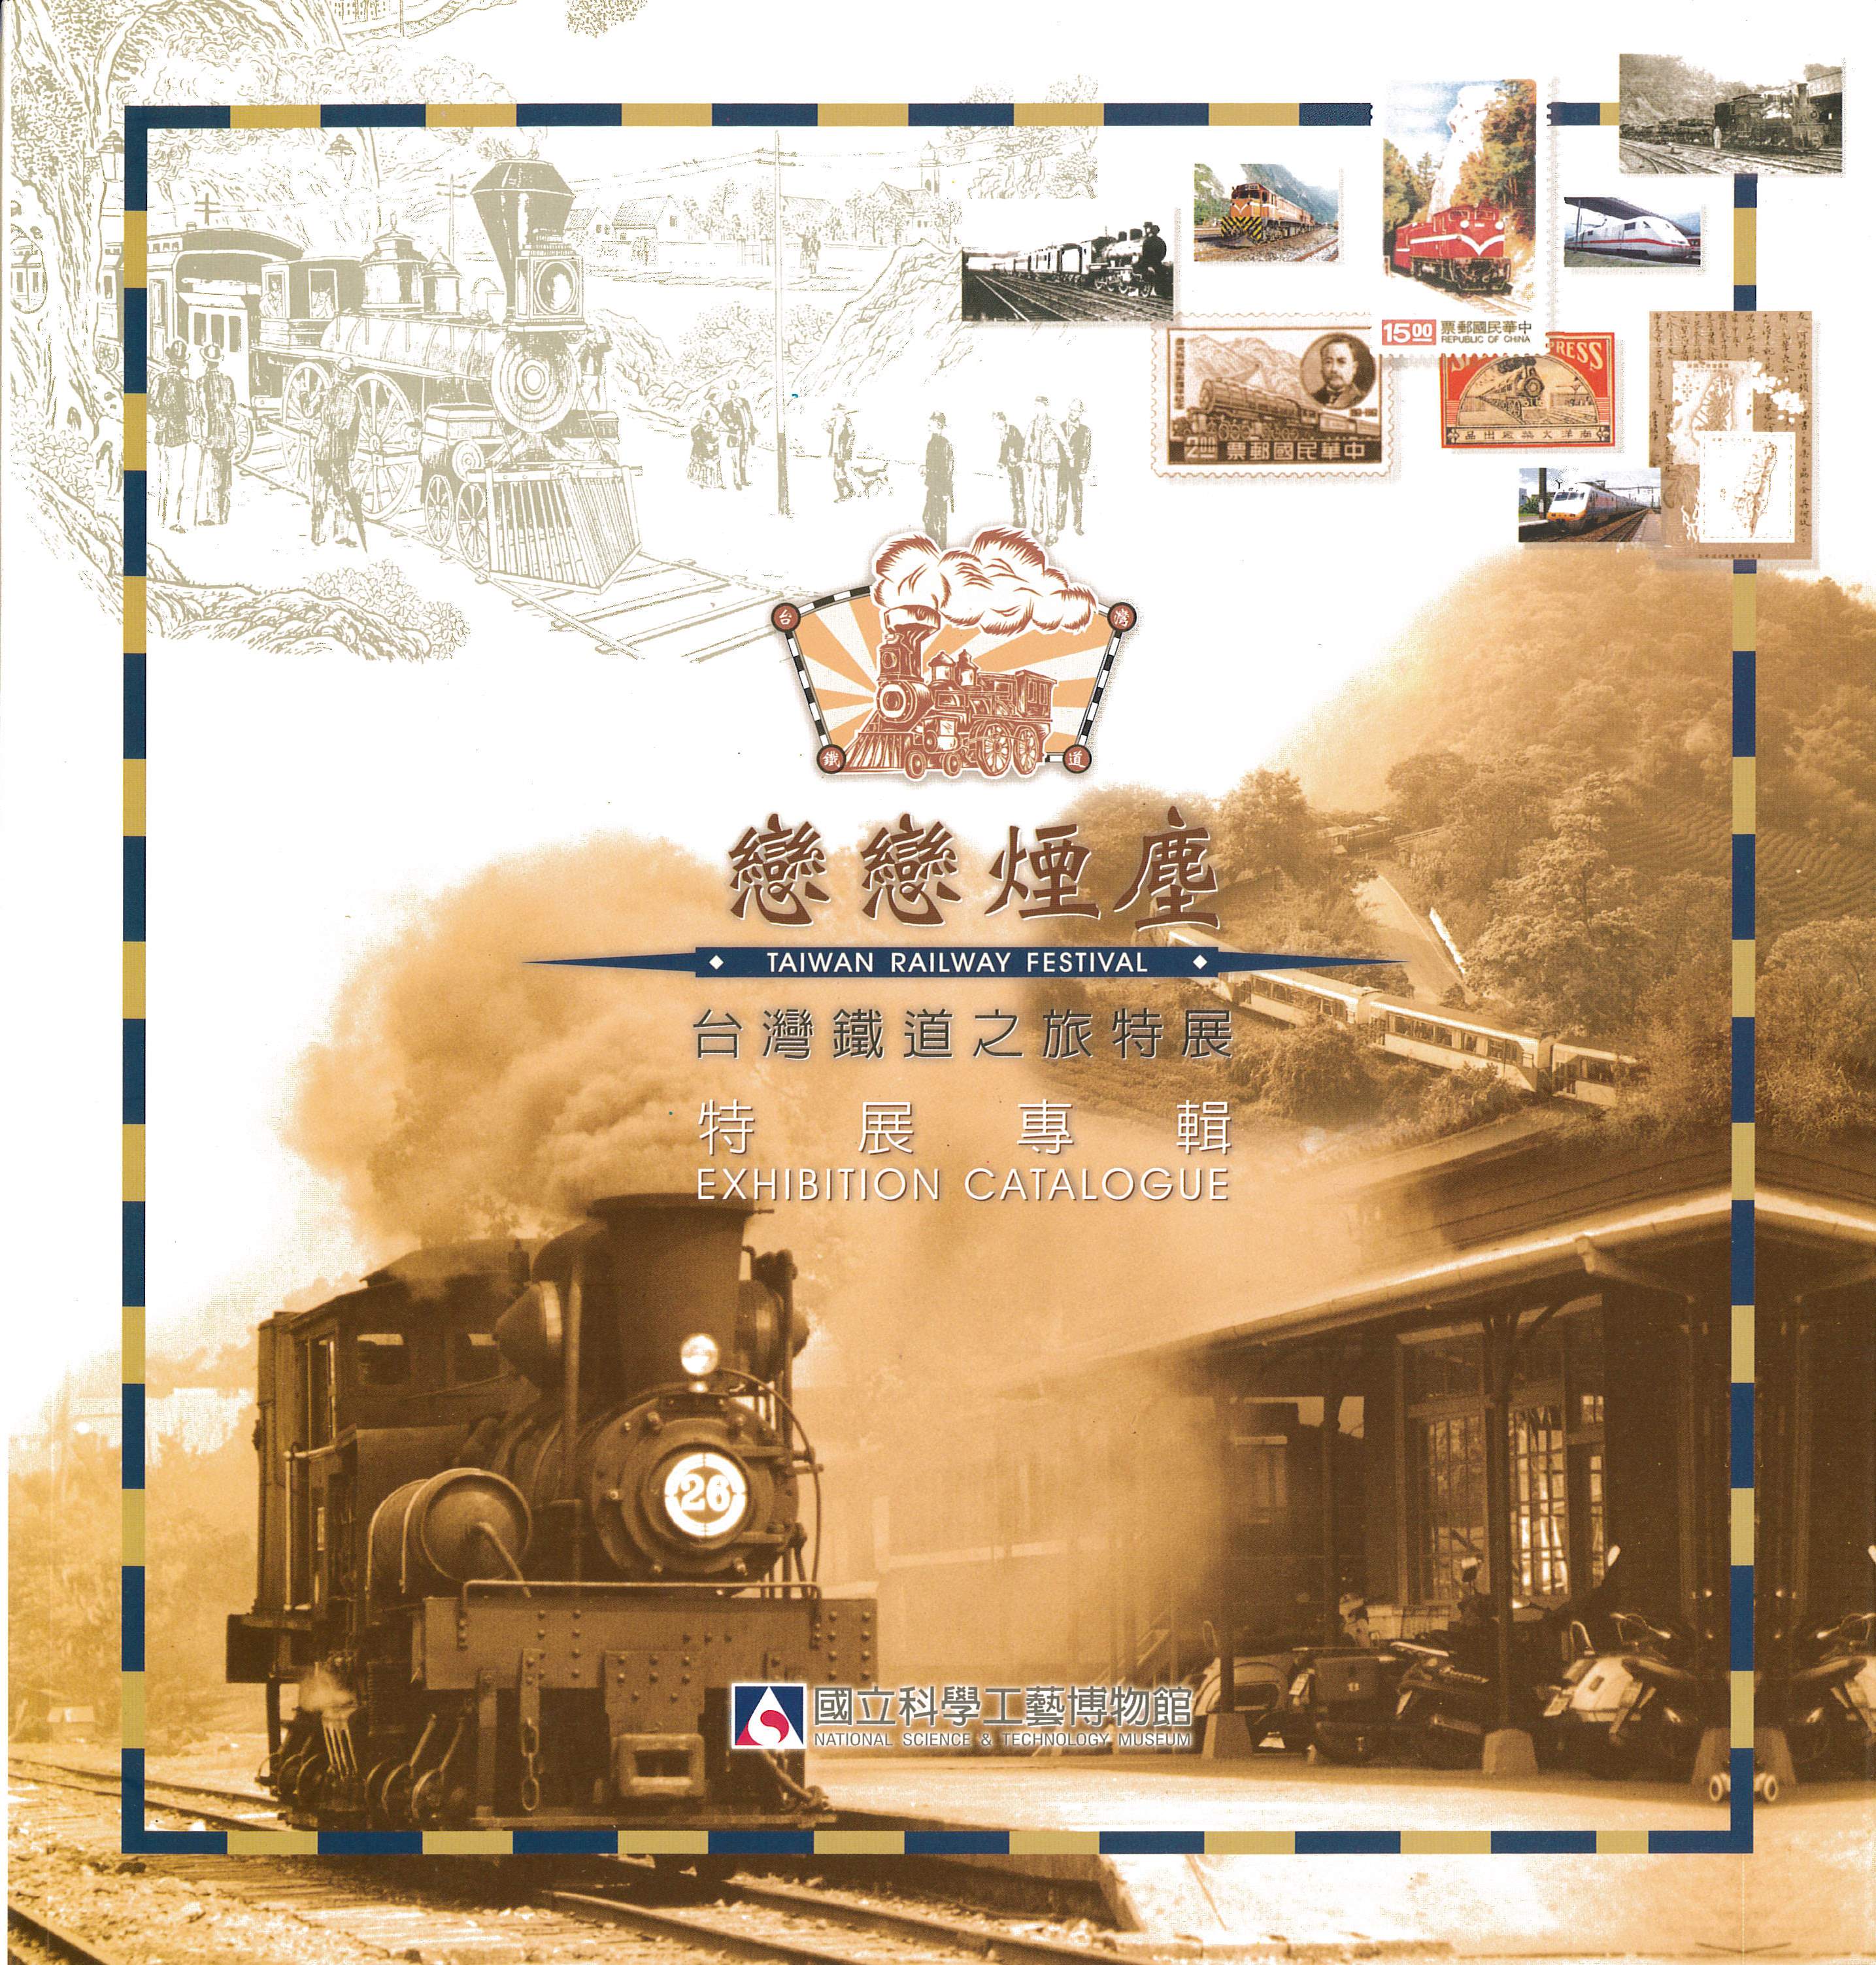 Taiwan Railway Festival